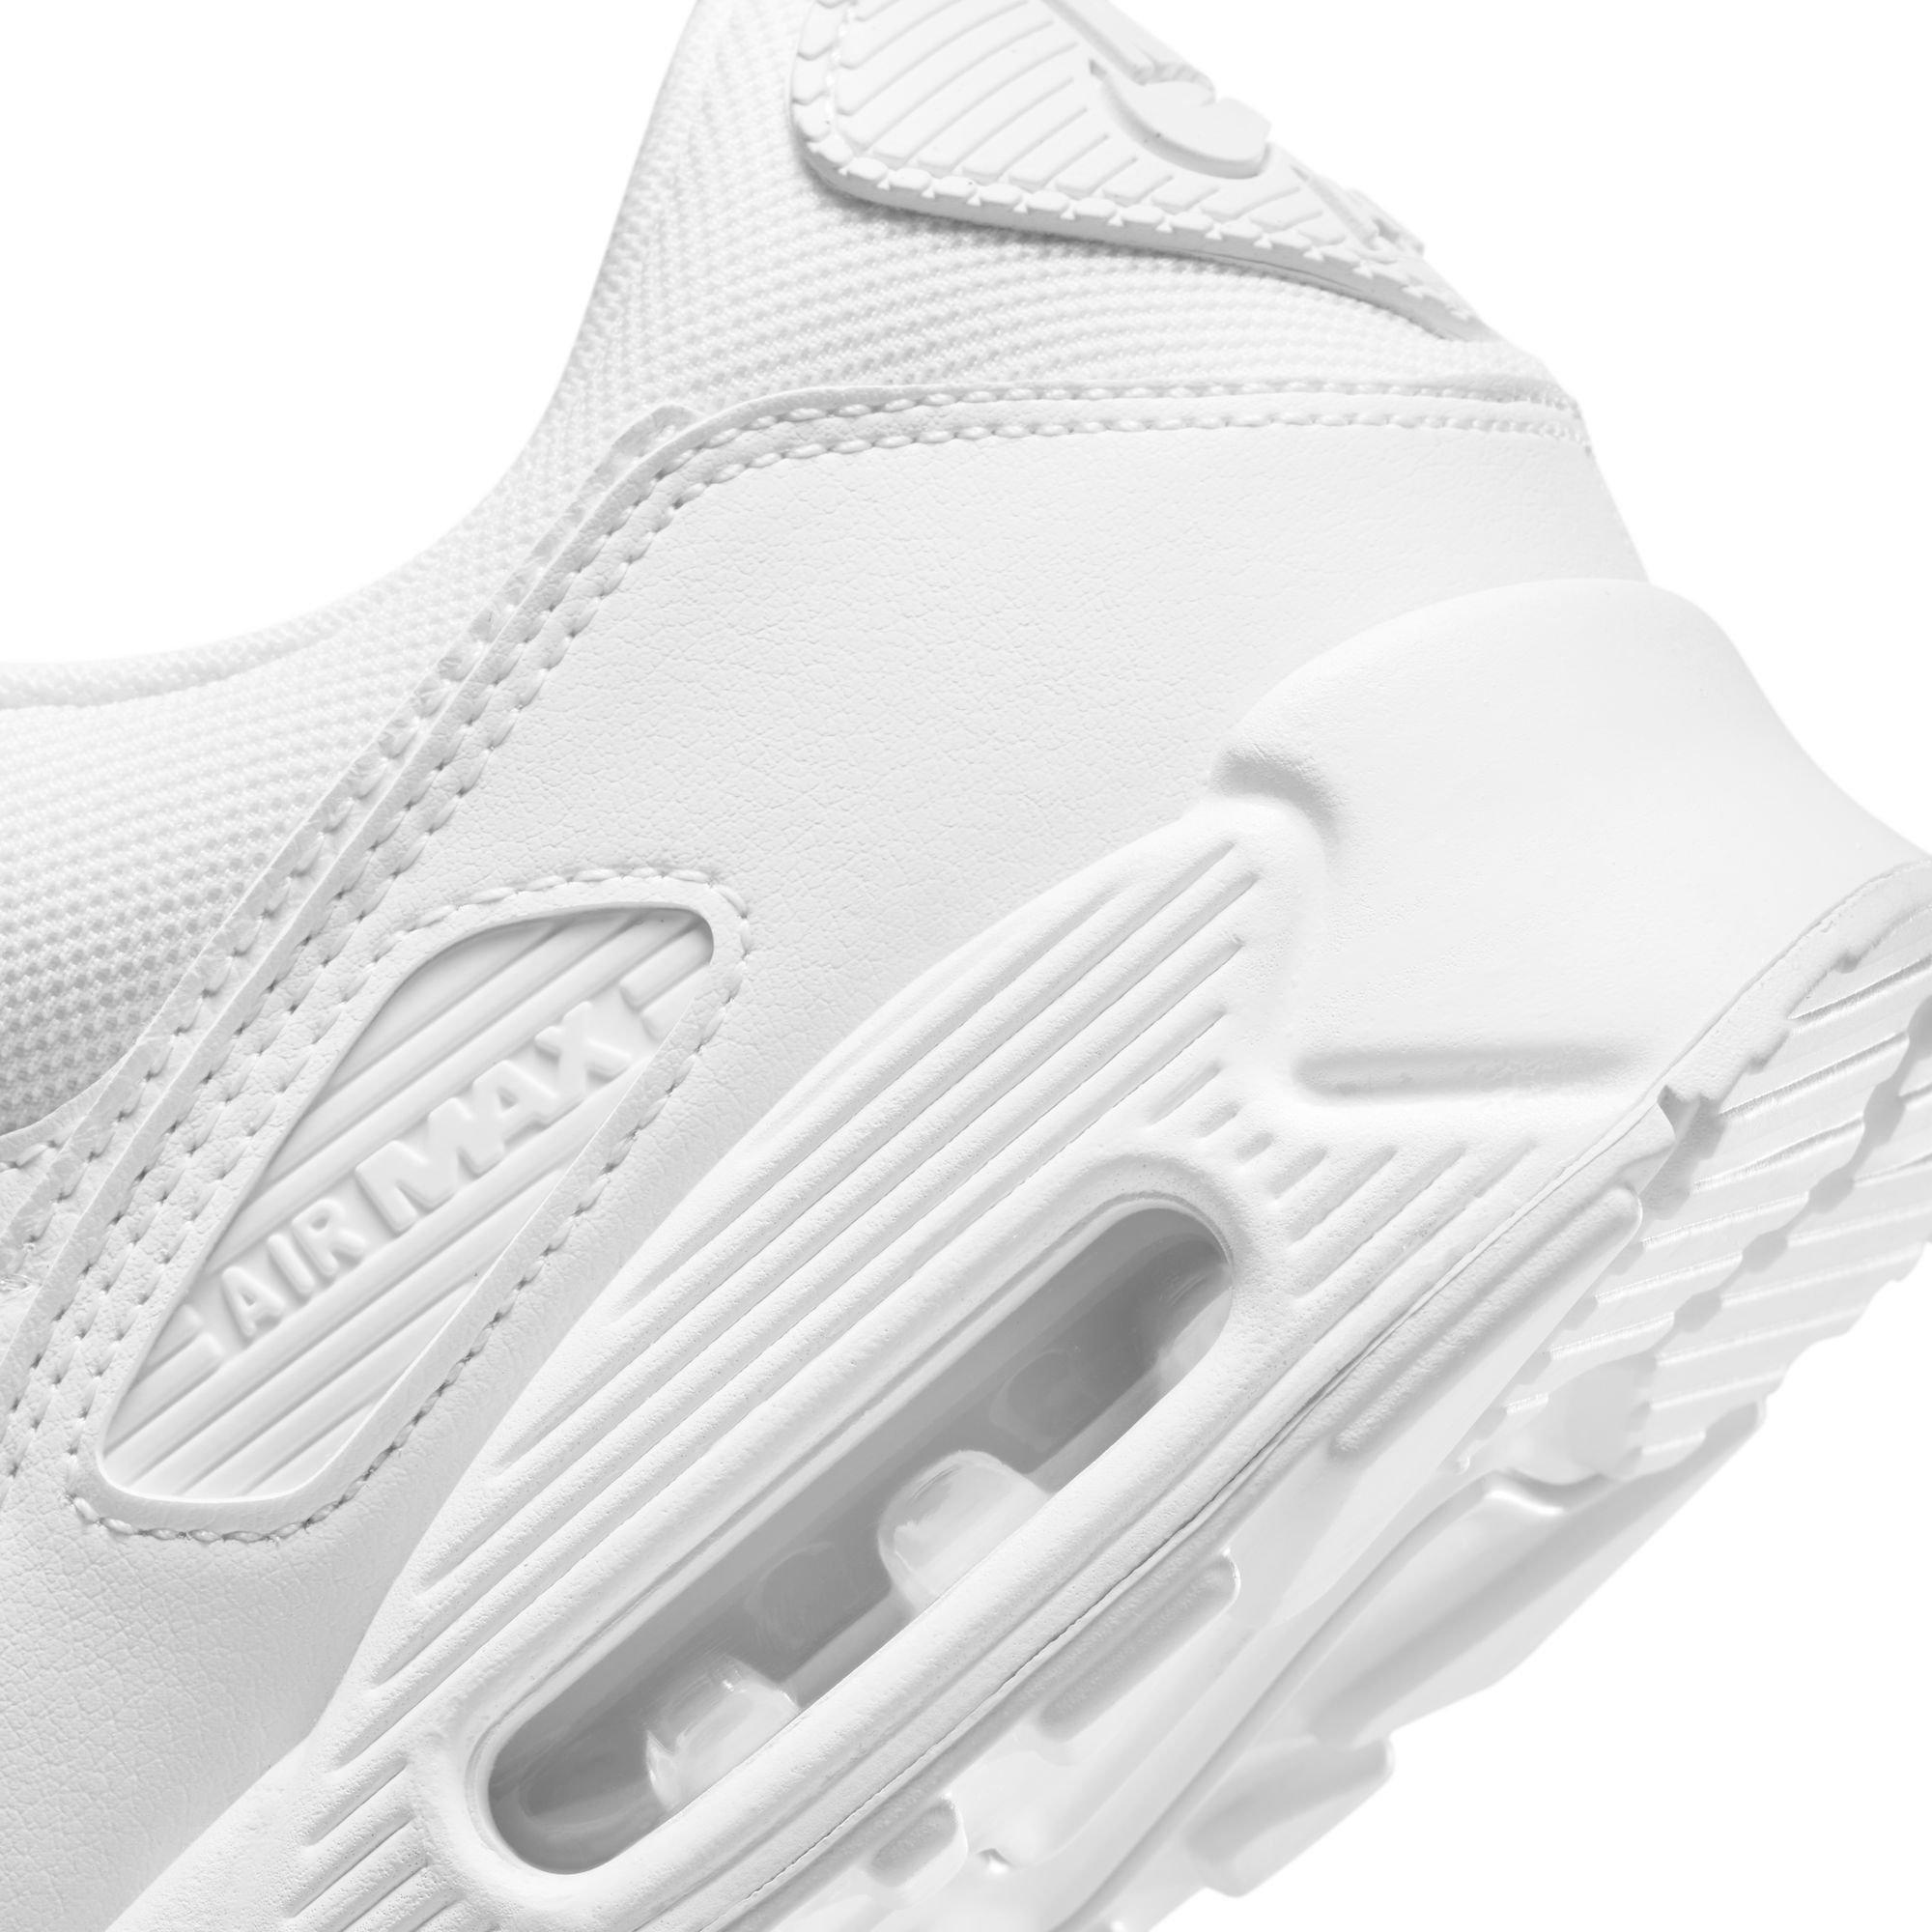 Nike Max "White/White" Women's Shoe